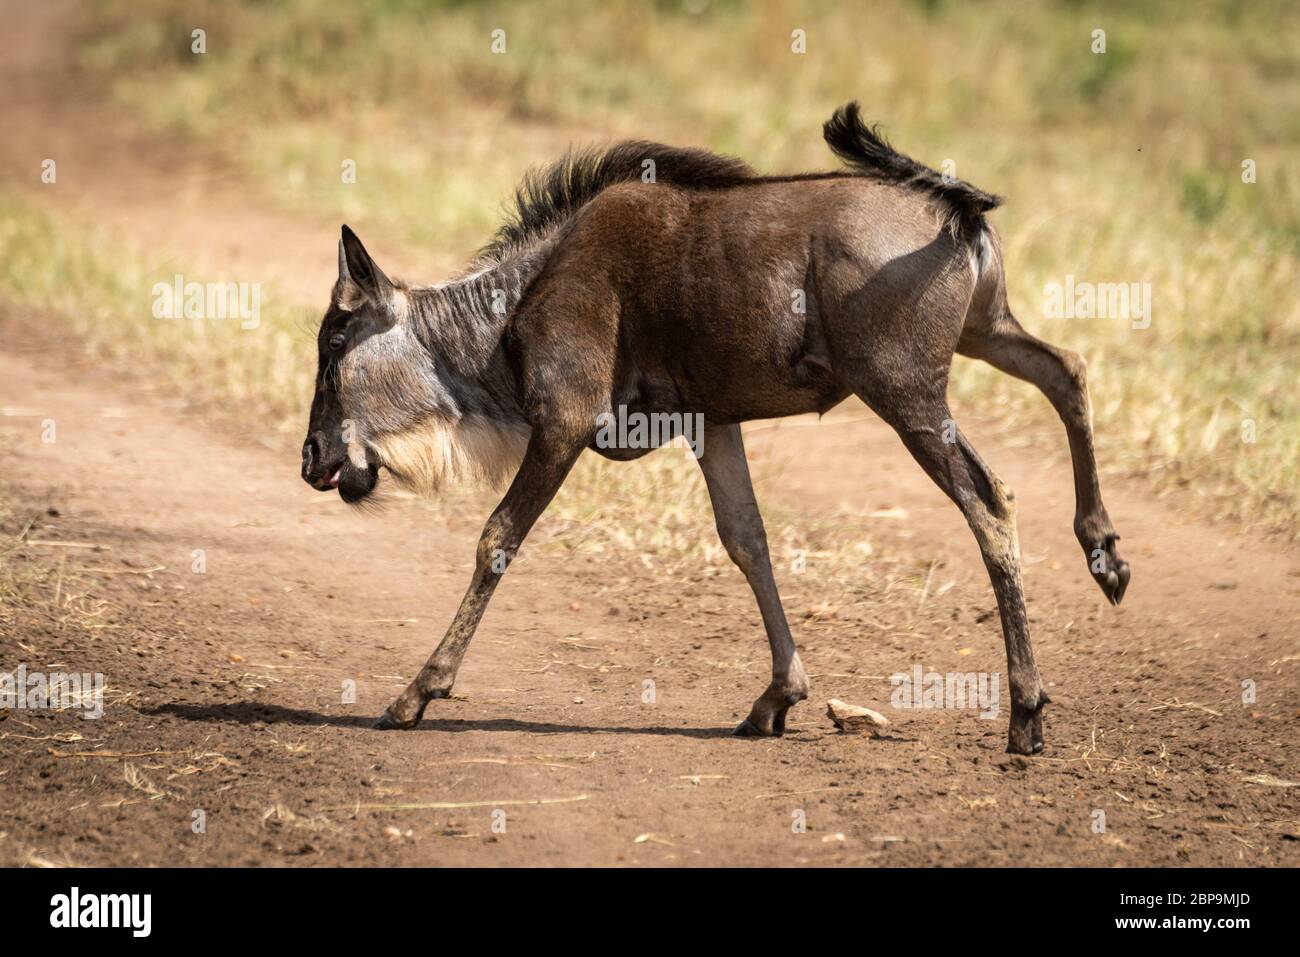 Blue wildebeest calf galloping across dirt track Stock Photo